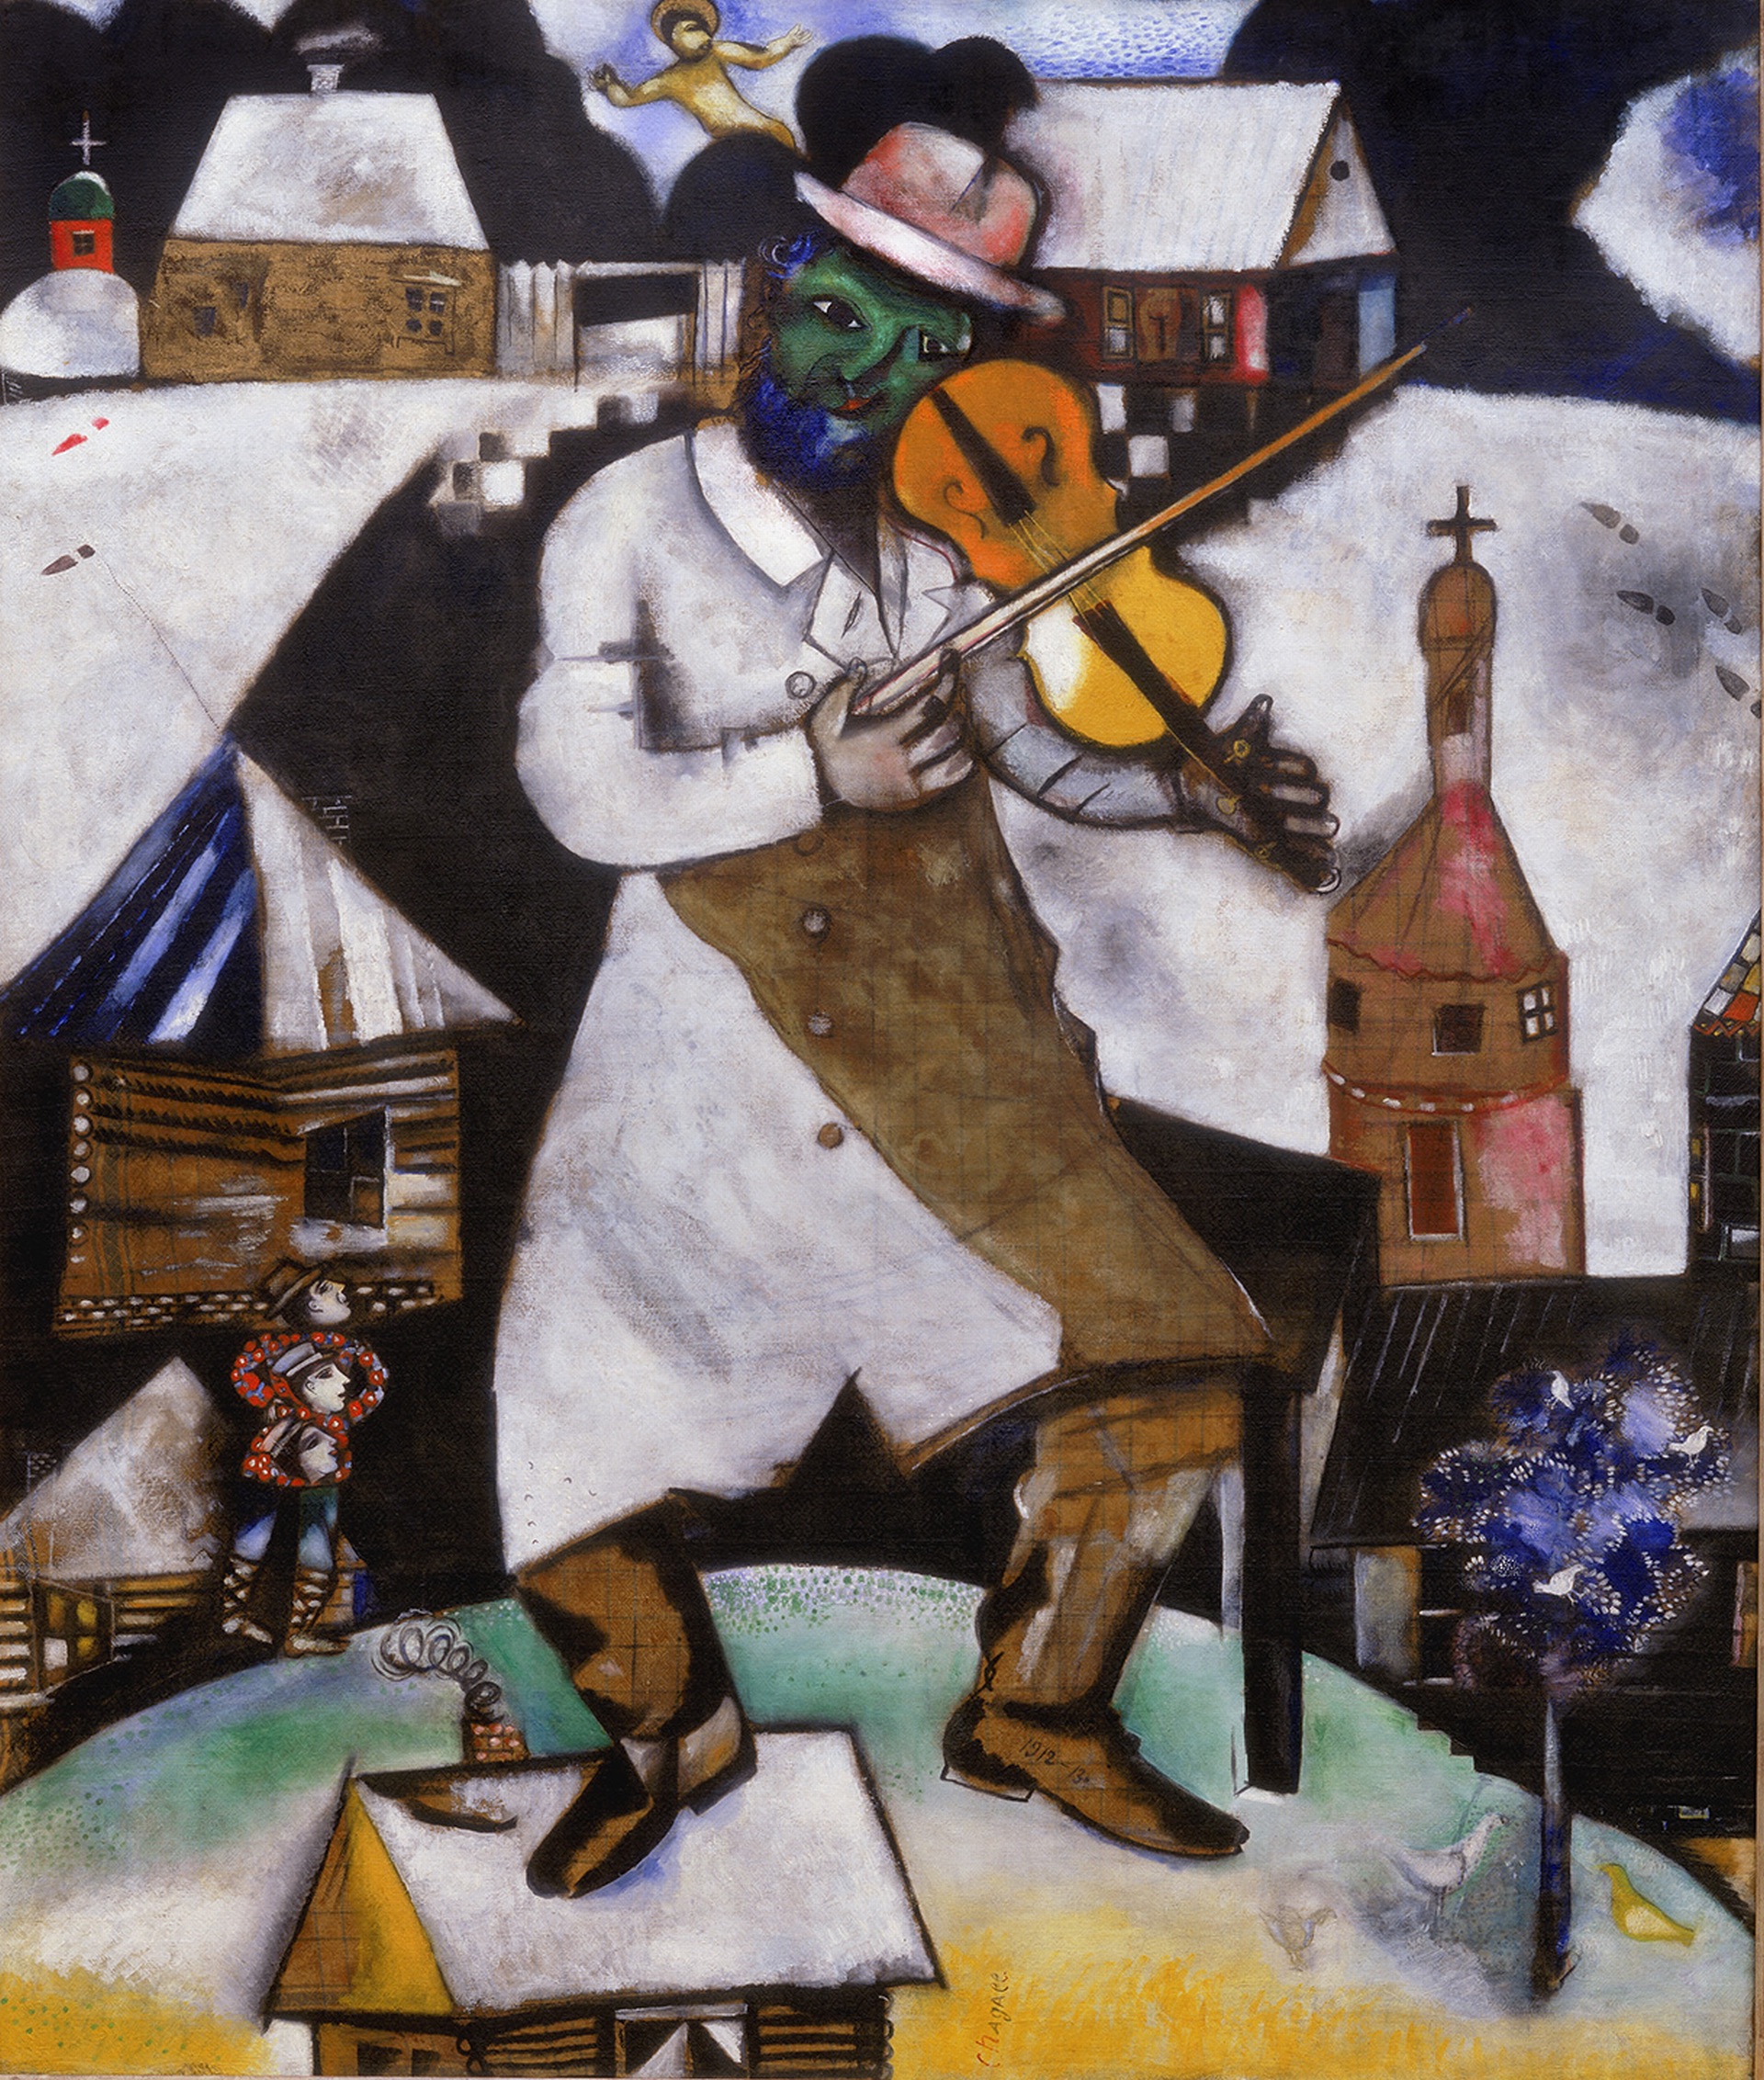 Zielony skrzypek by Marc Chagall - 1912-1913 - 196.5 x 166.5 cm 